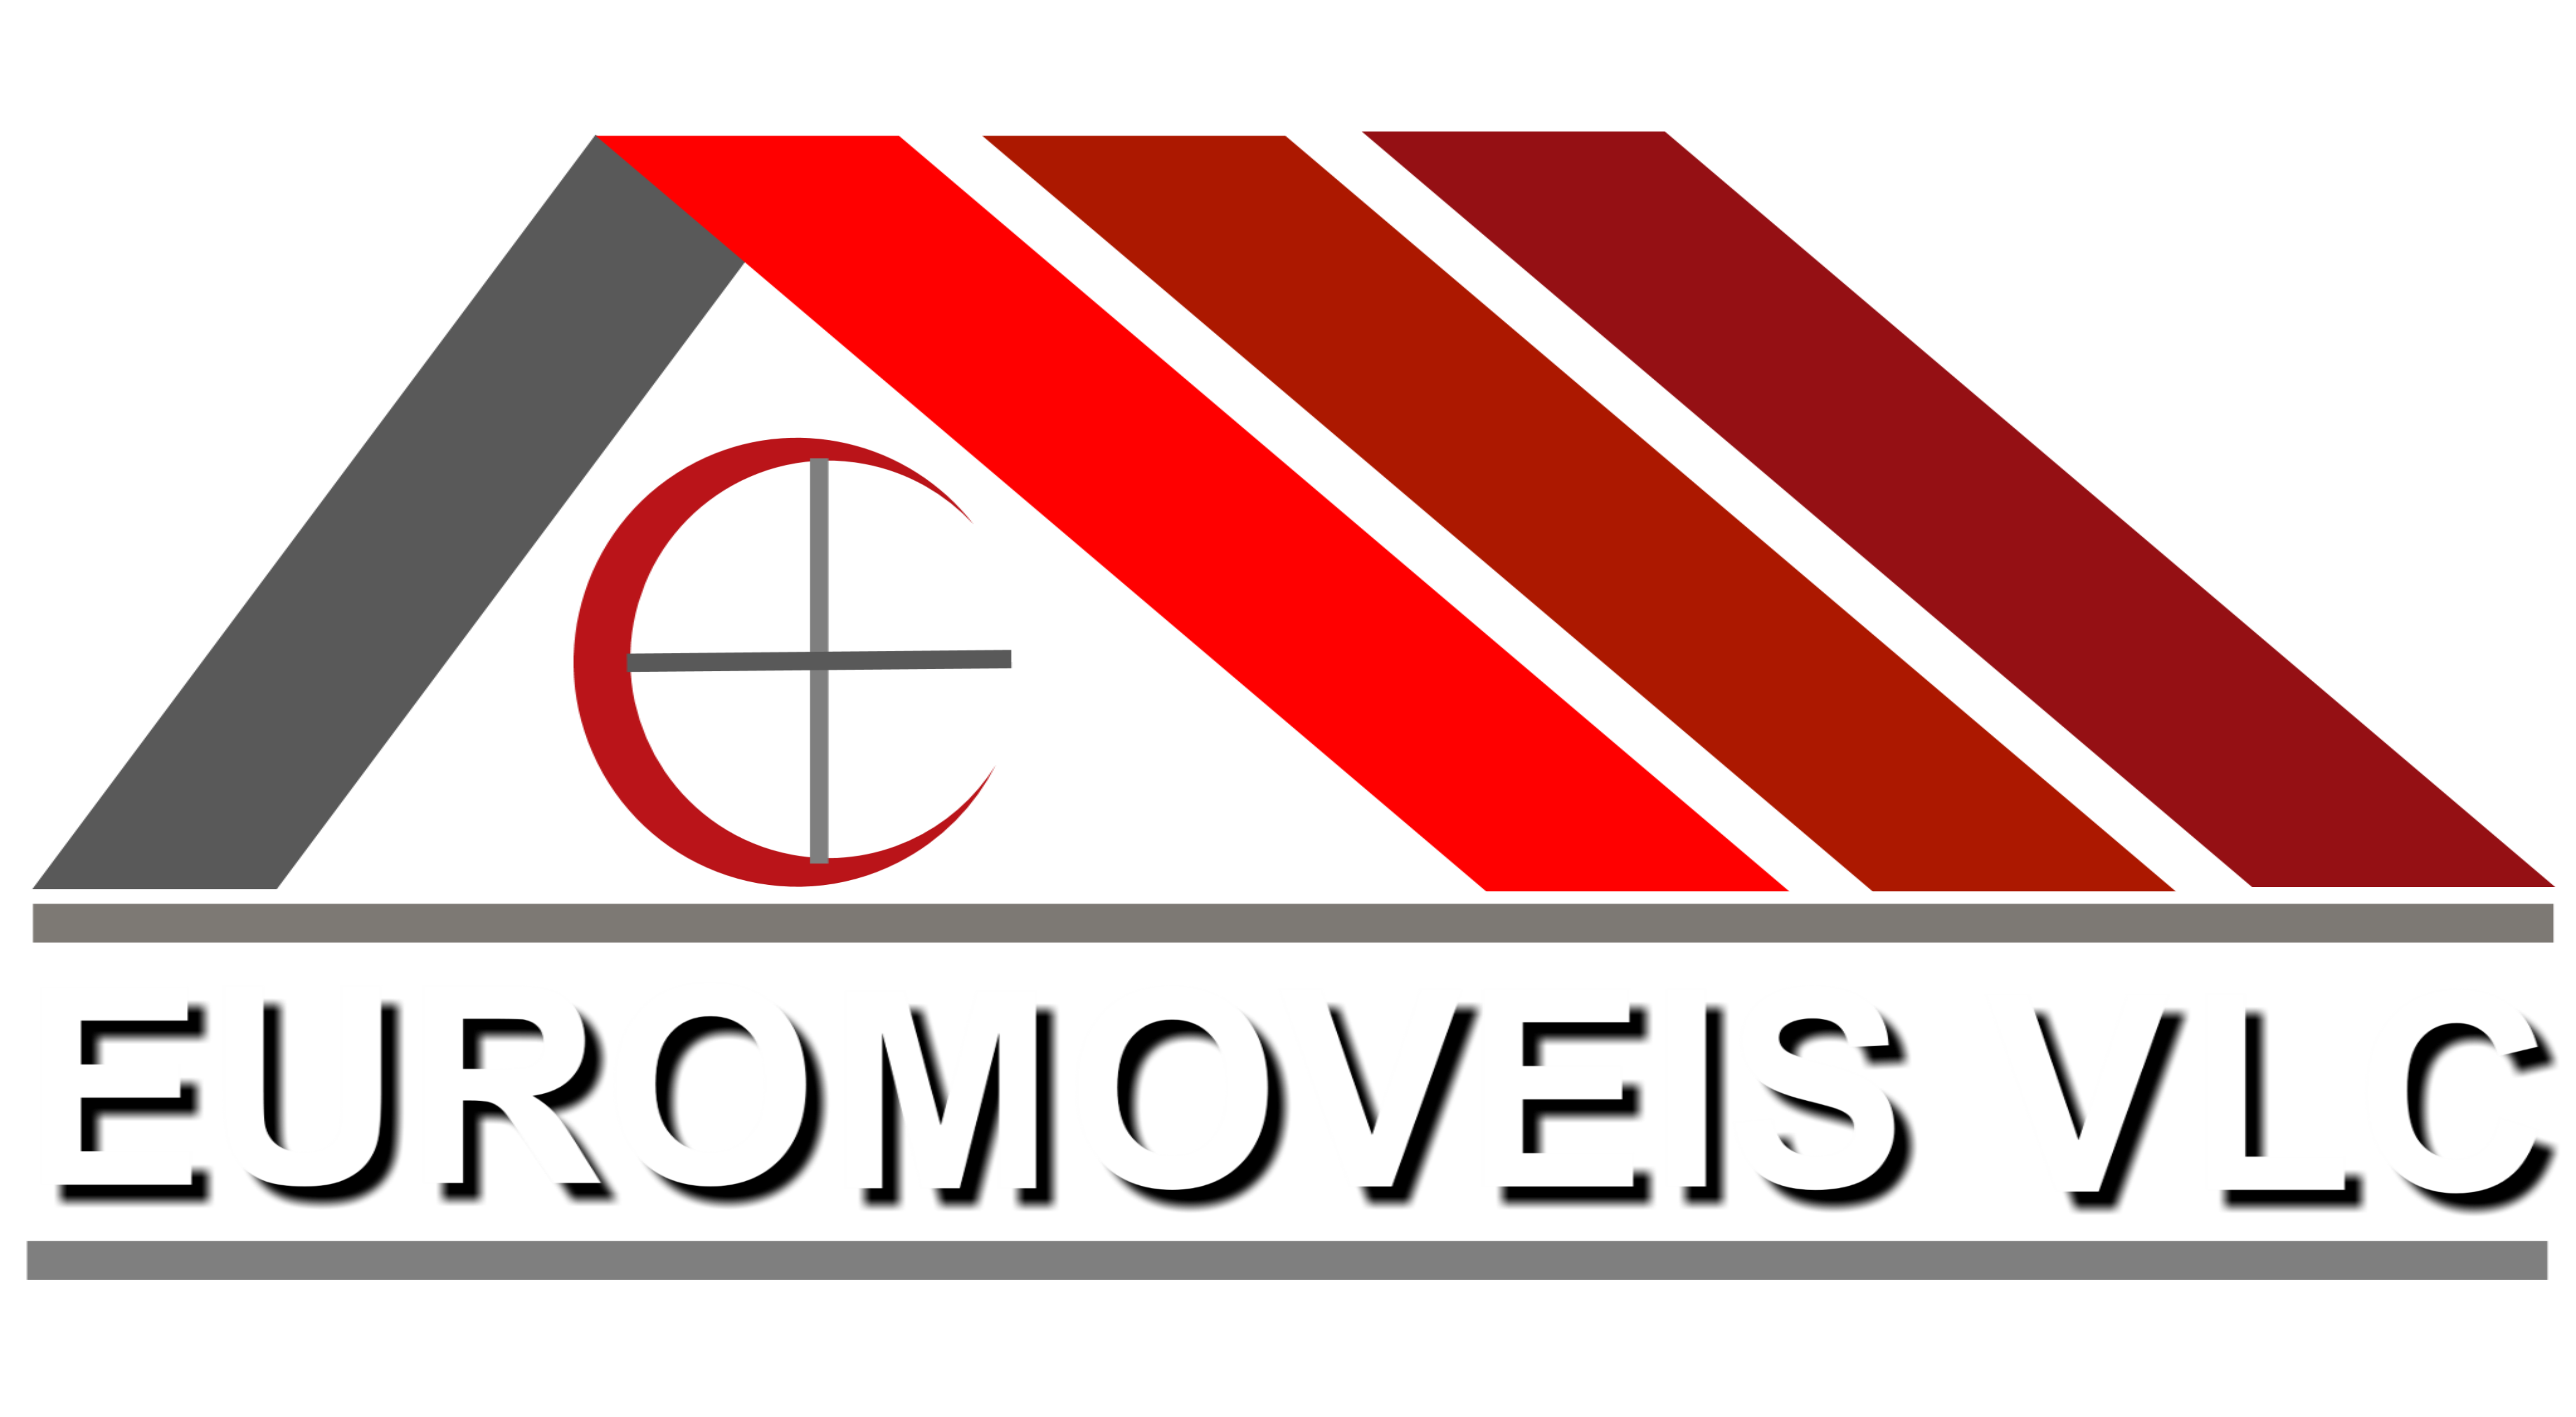 EuroMoveis VLC